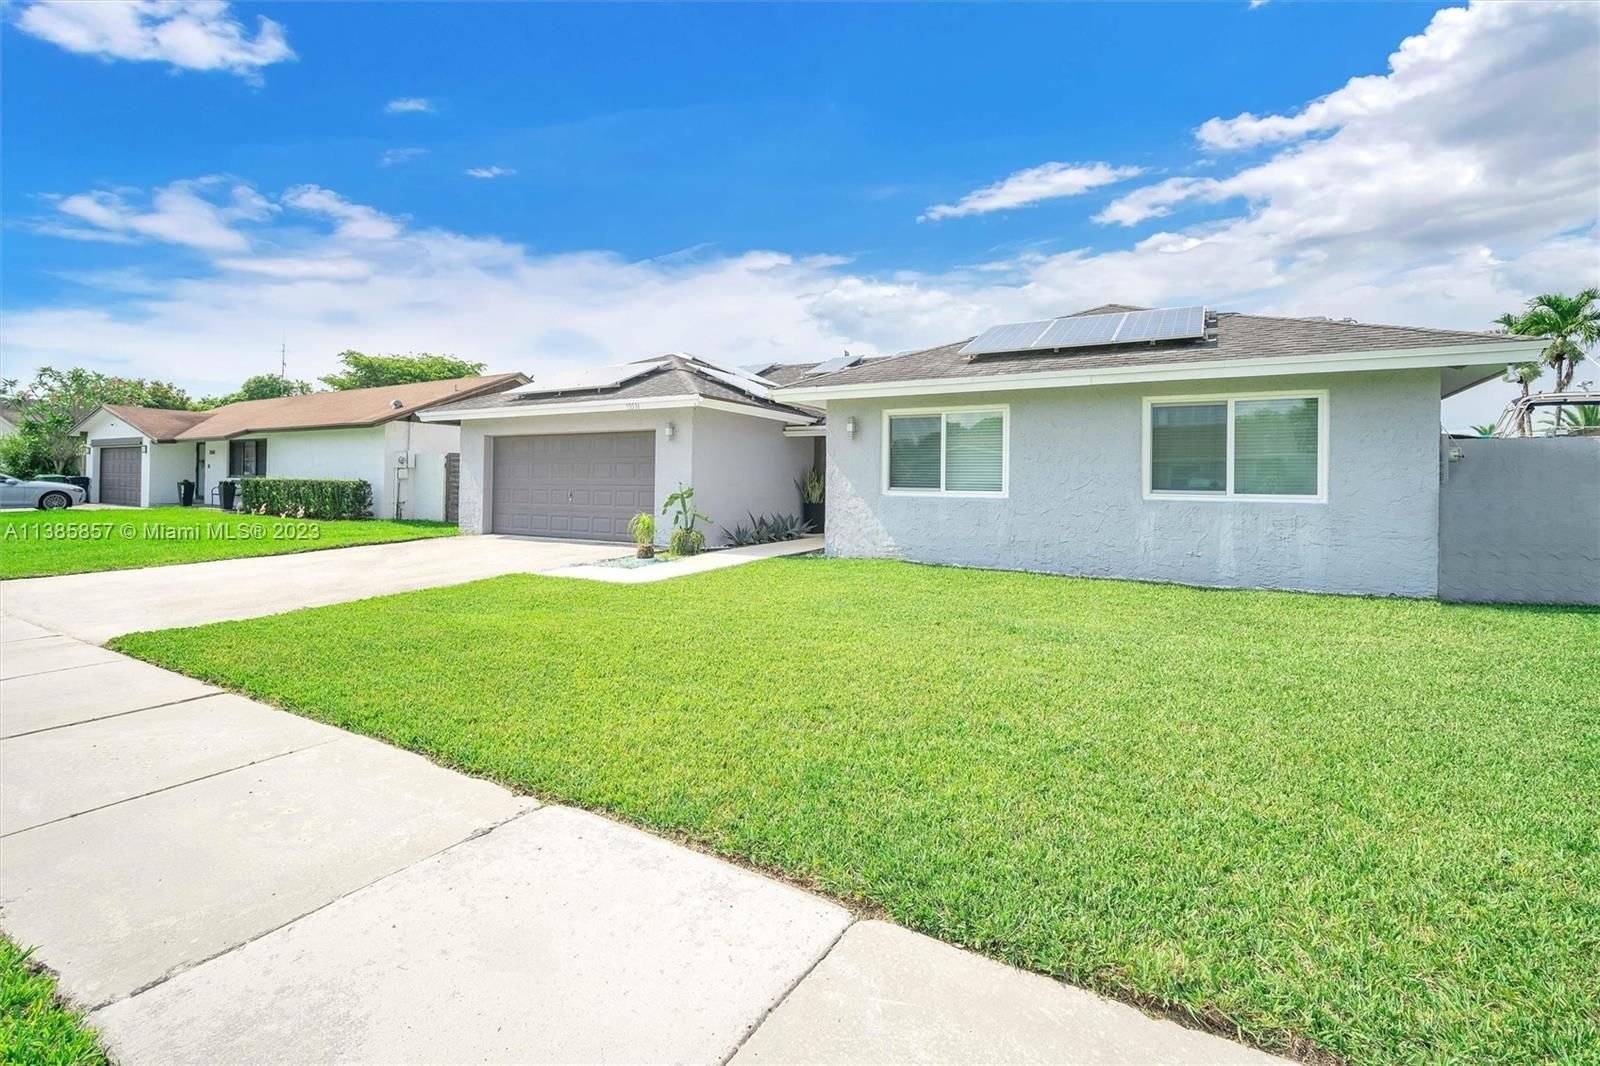 Real estate property located at 13531 97th St, Miami-Dade County, Miami, FL